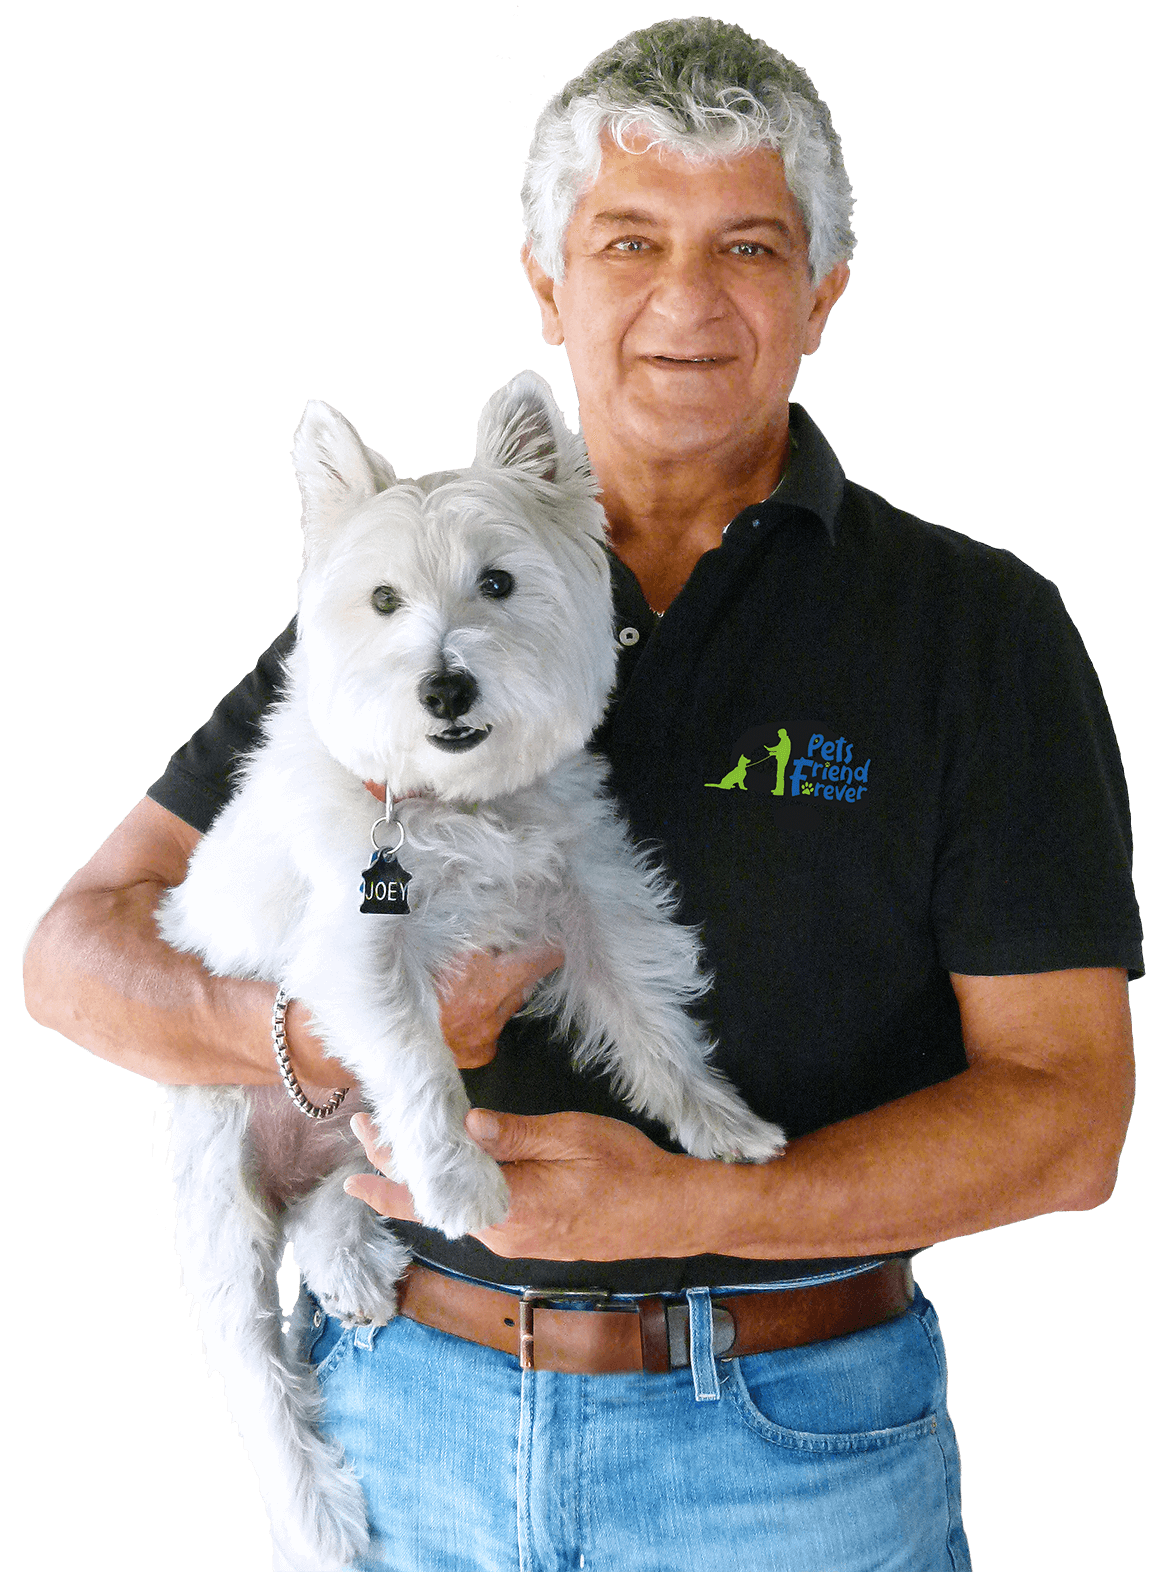 Pets Friend Forever - Dog Trainer in Orange County - Bruce Afkami